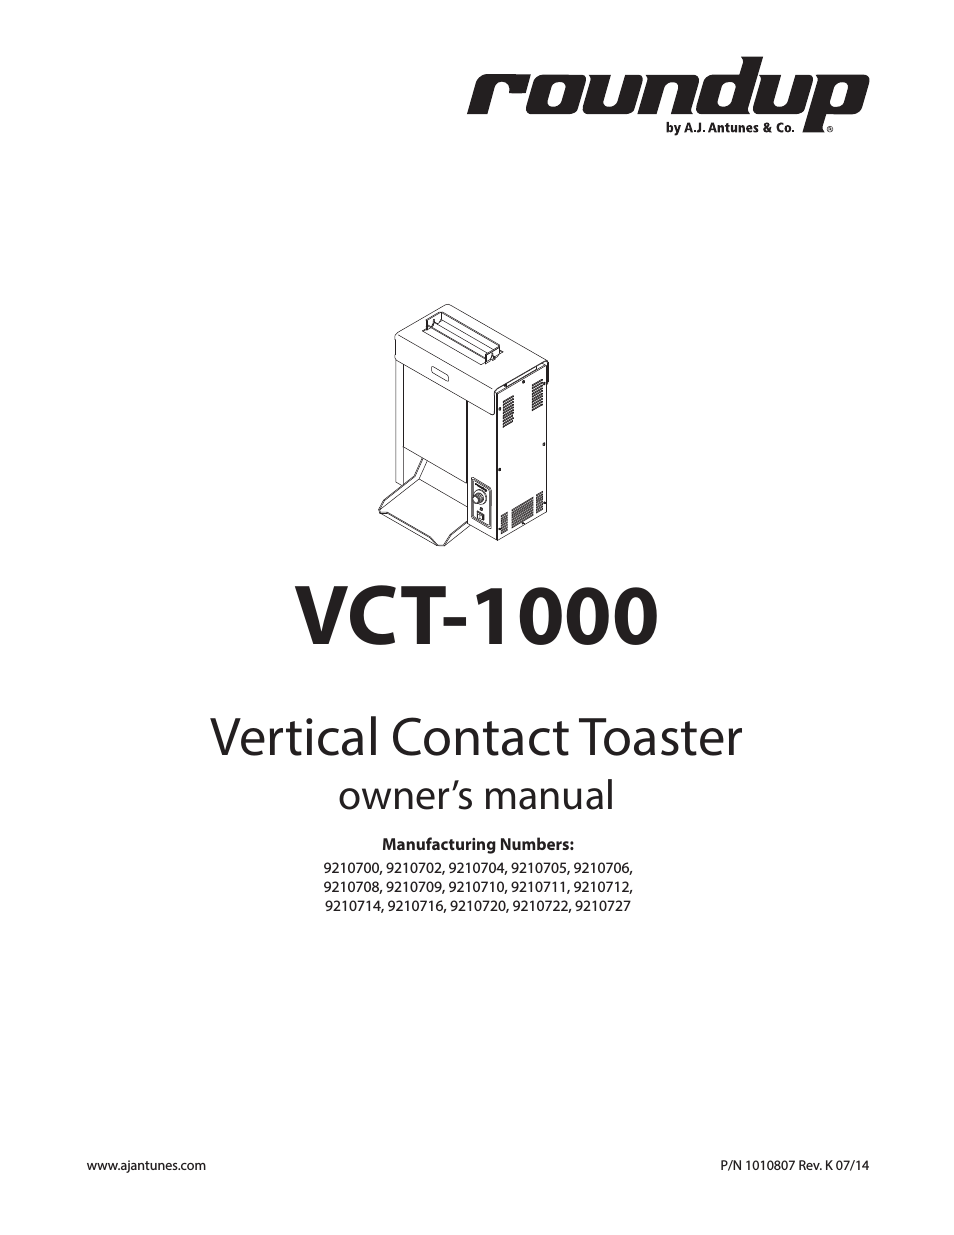 VCT-1000 9210705